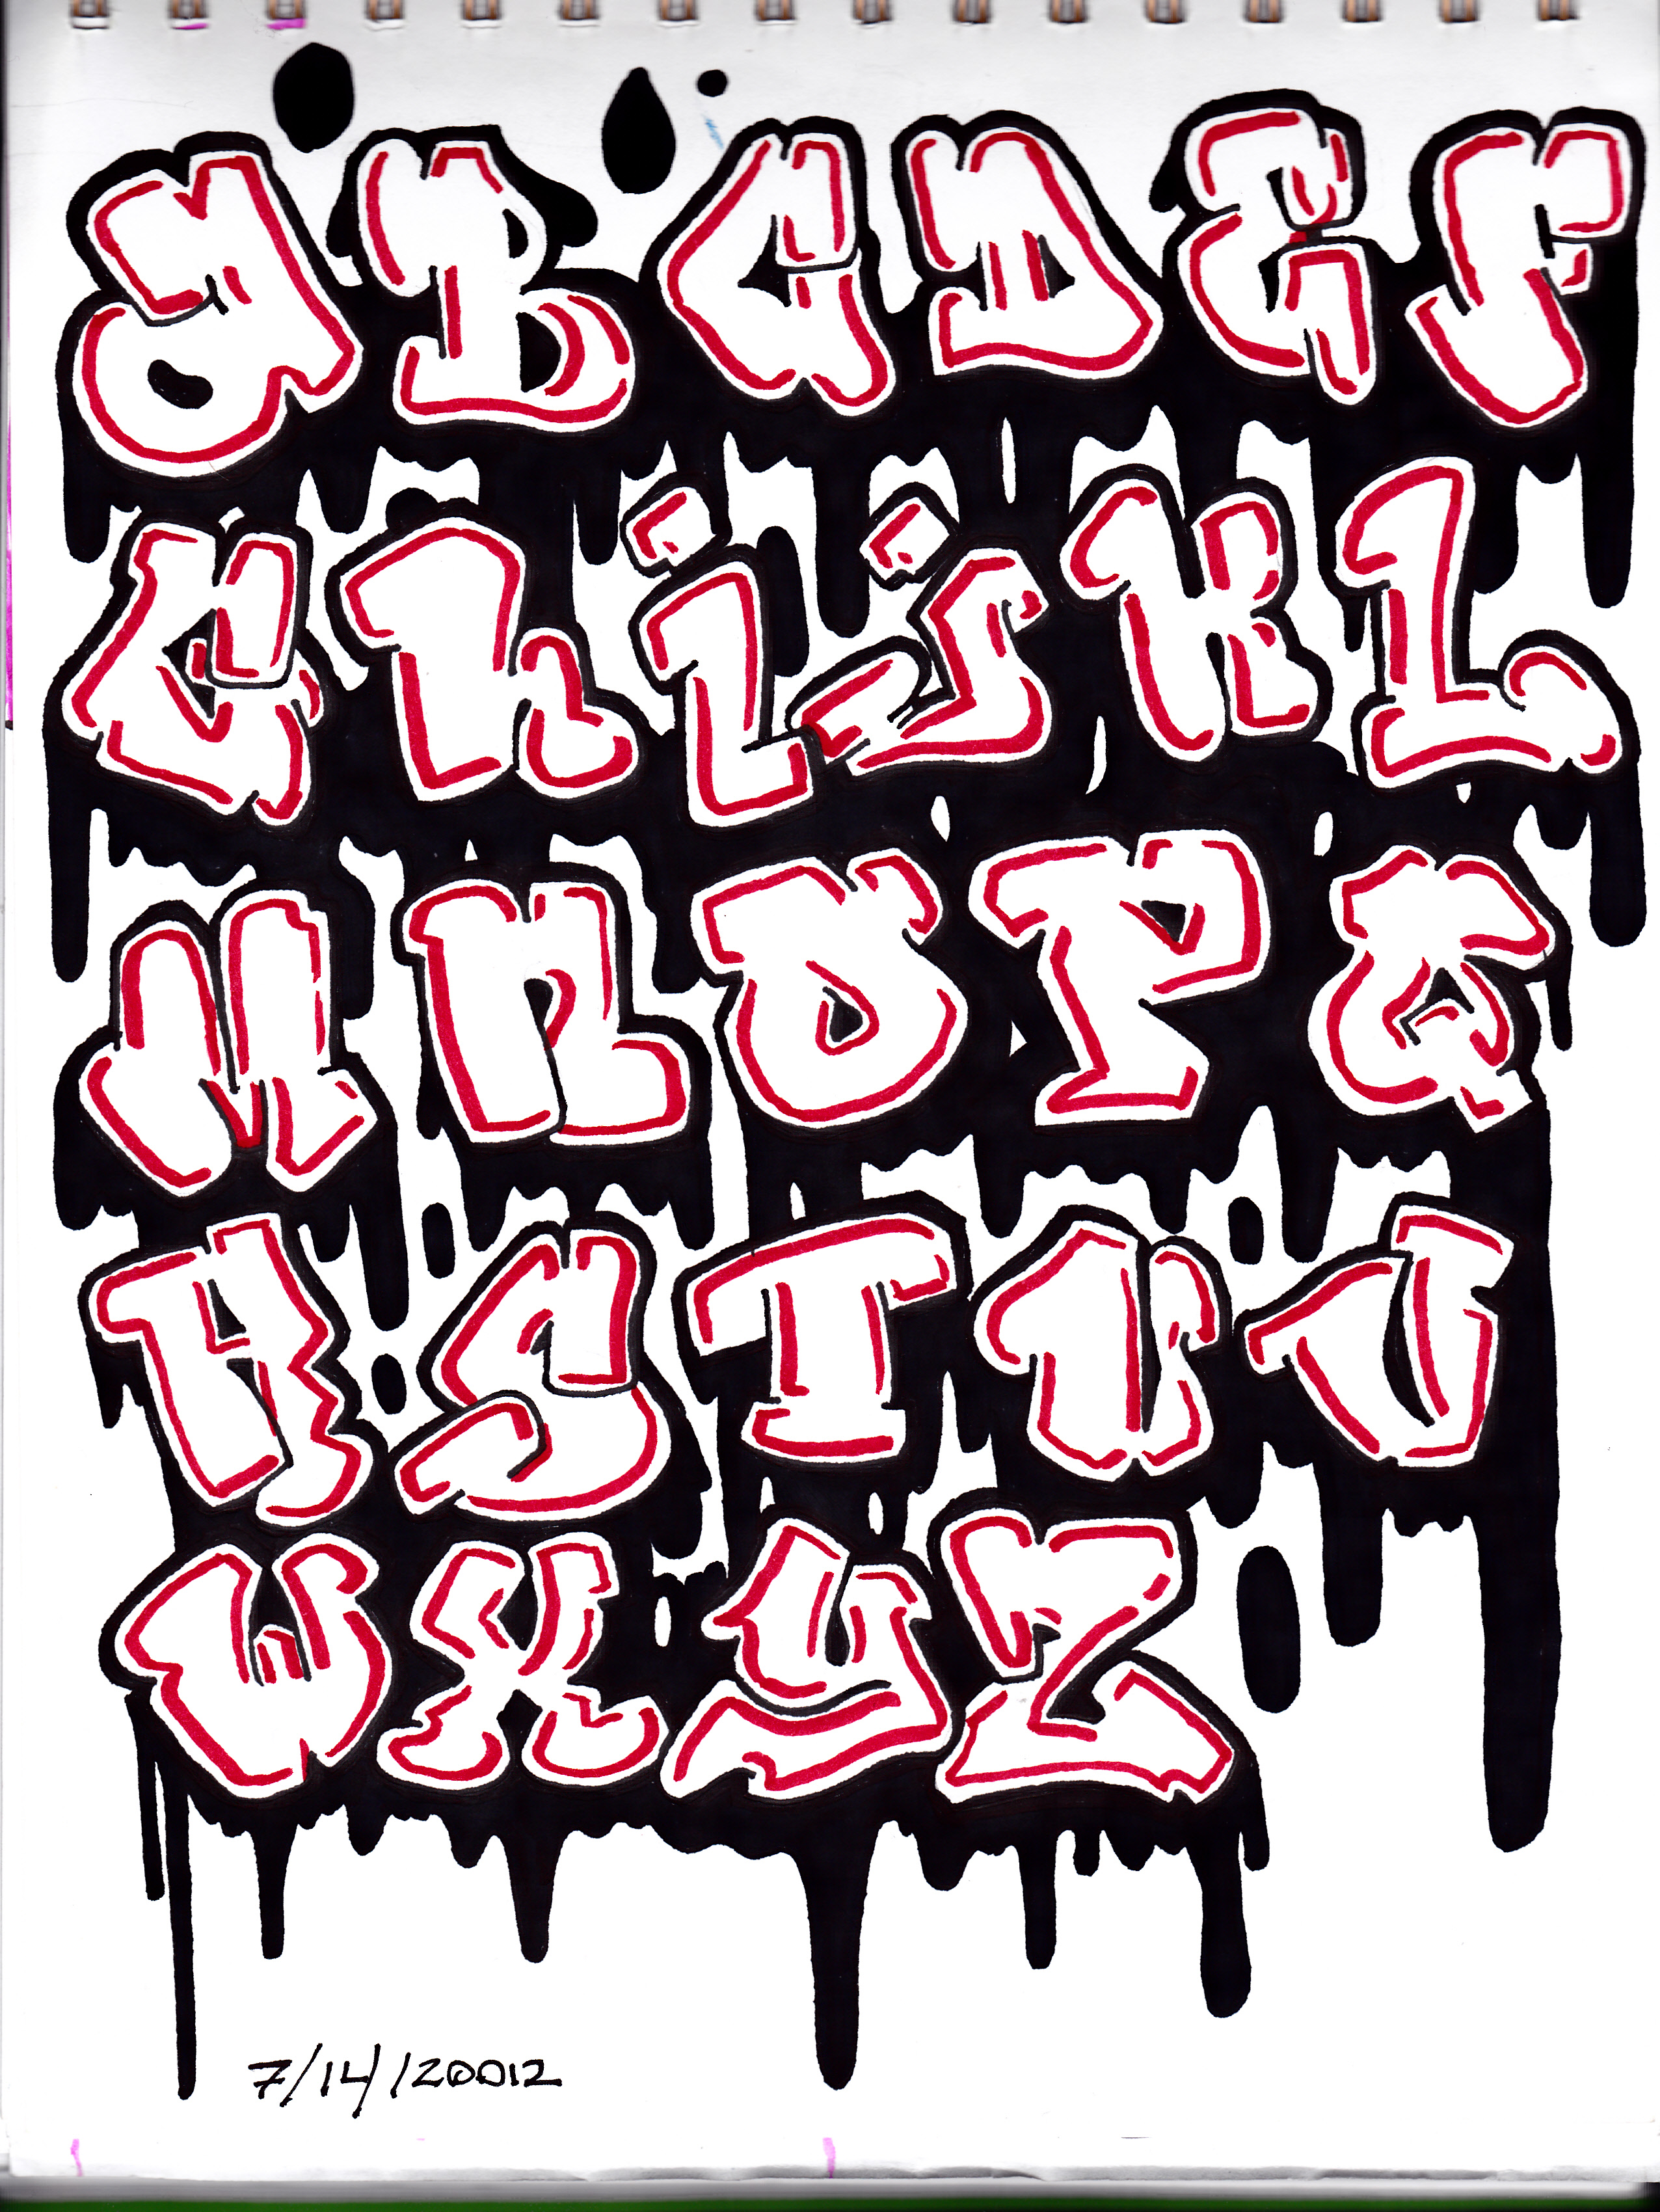 10 Different Graffiti Fonts Images - Graffiti Fonts ...